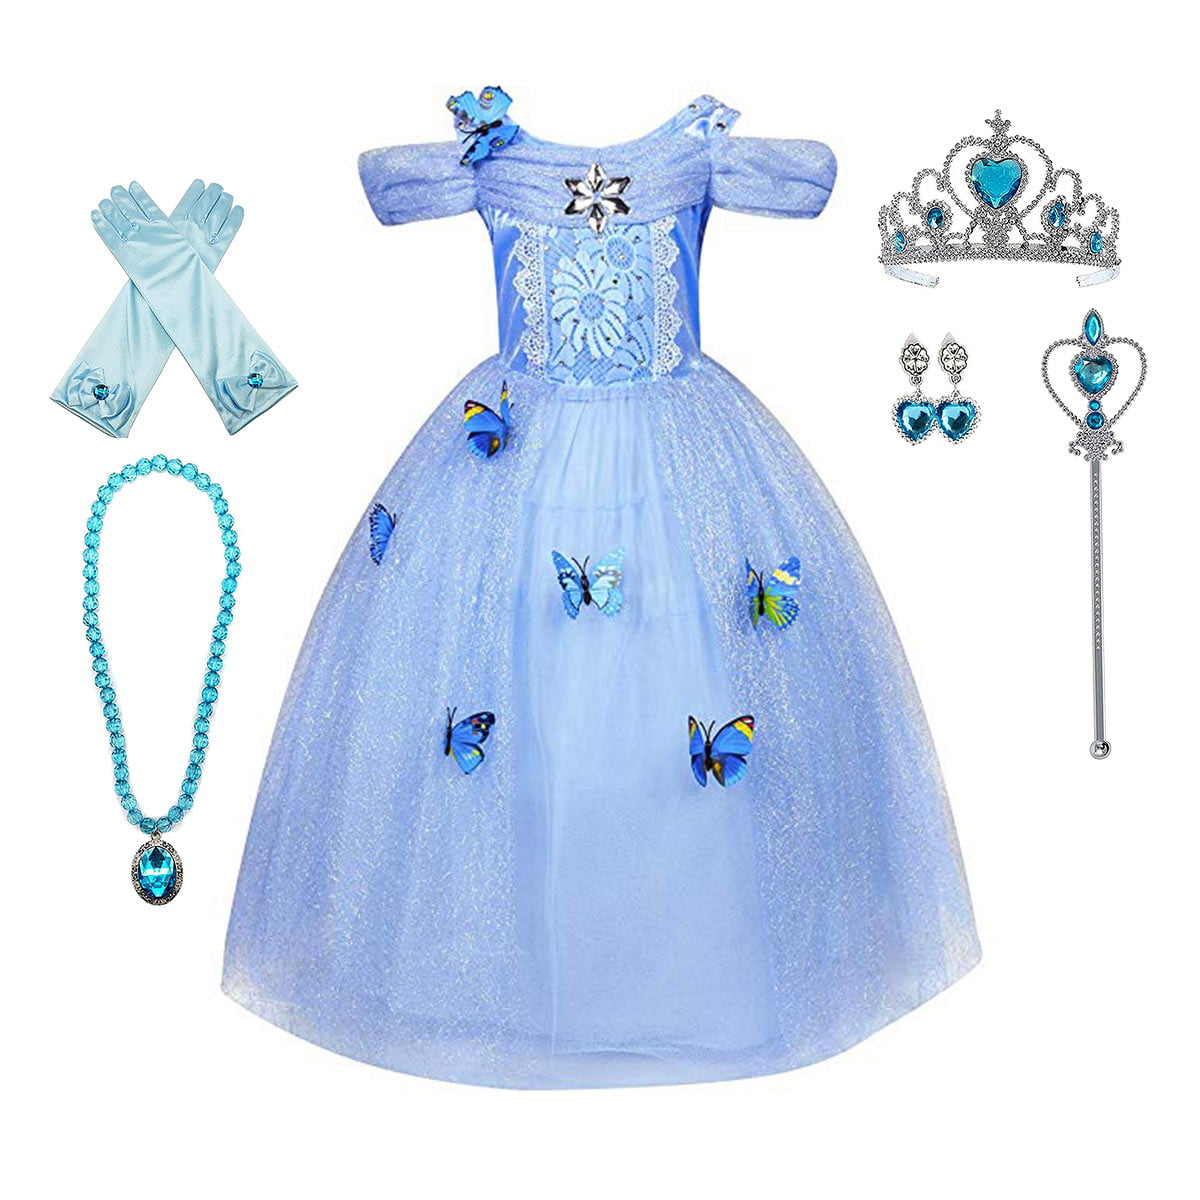 princess dress